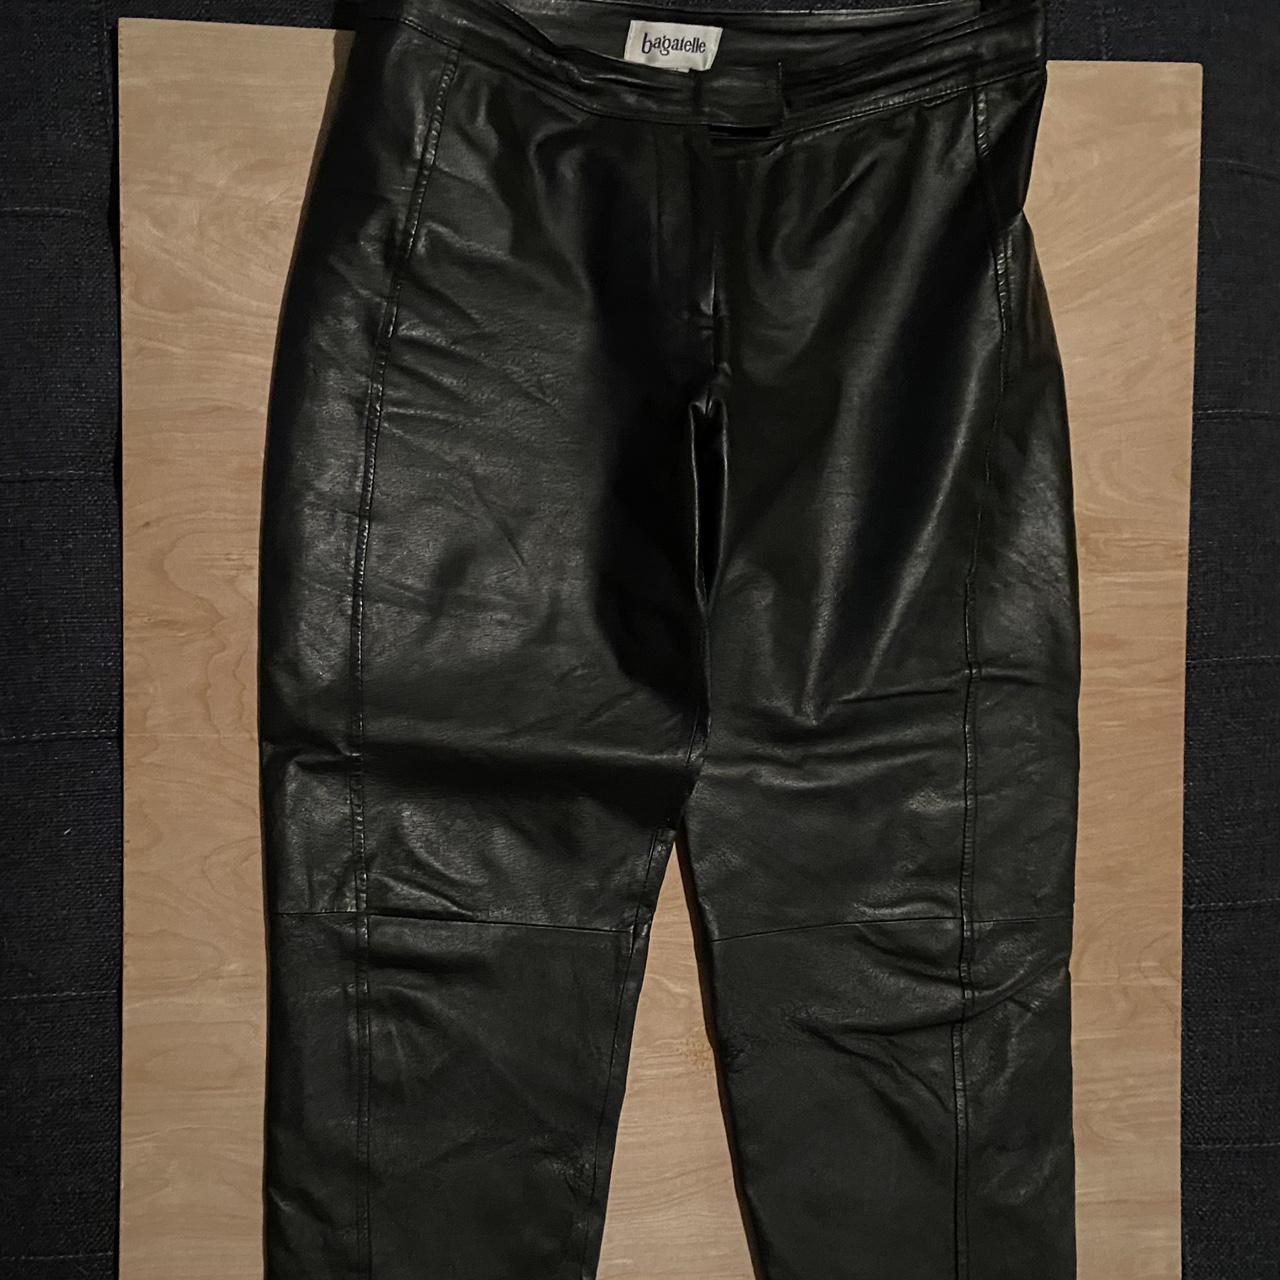 black genuine leather pants ♡ GRANDMA’S SALE 👵🏼👩🏽‍🦱... - Depop